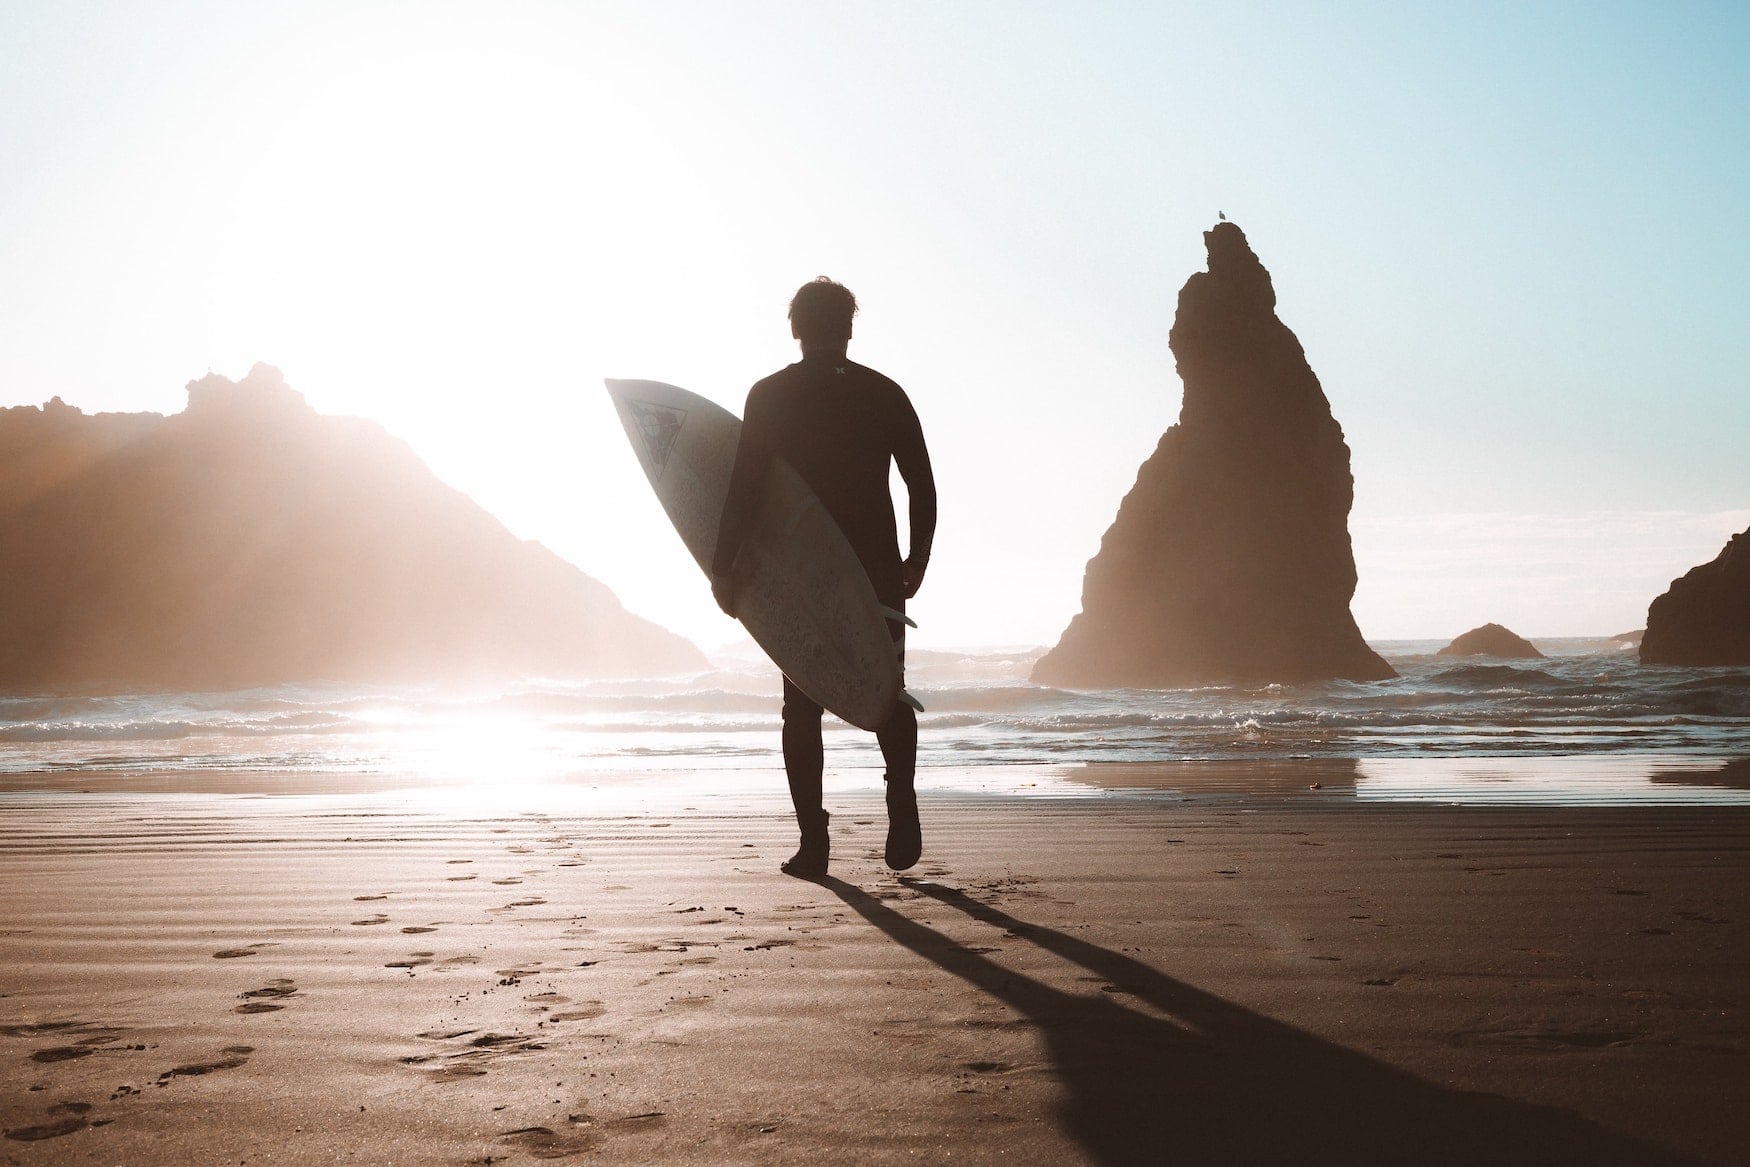 Strand in Oregon mit Surfer